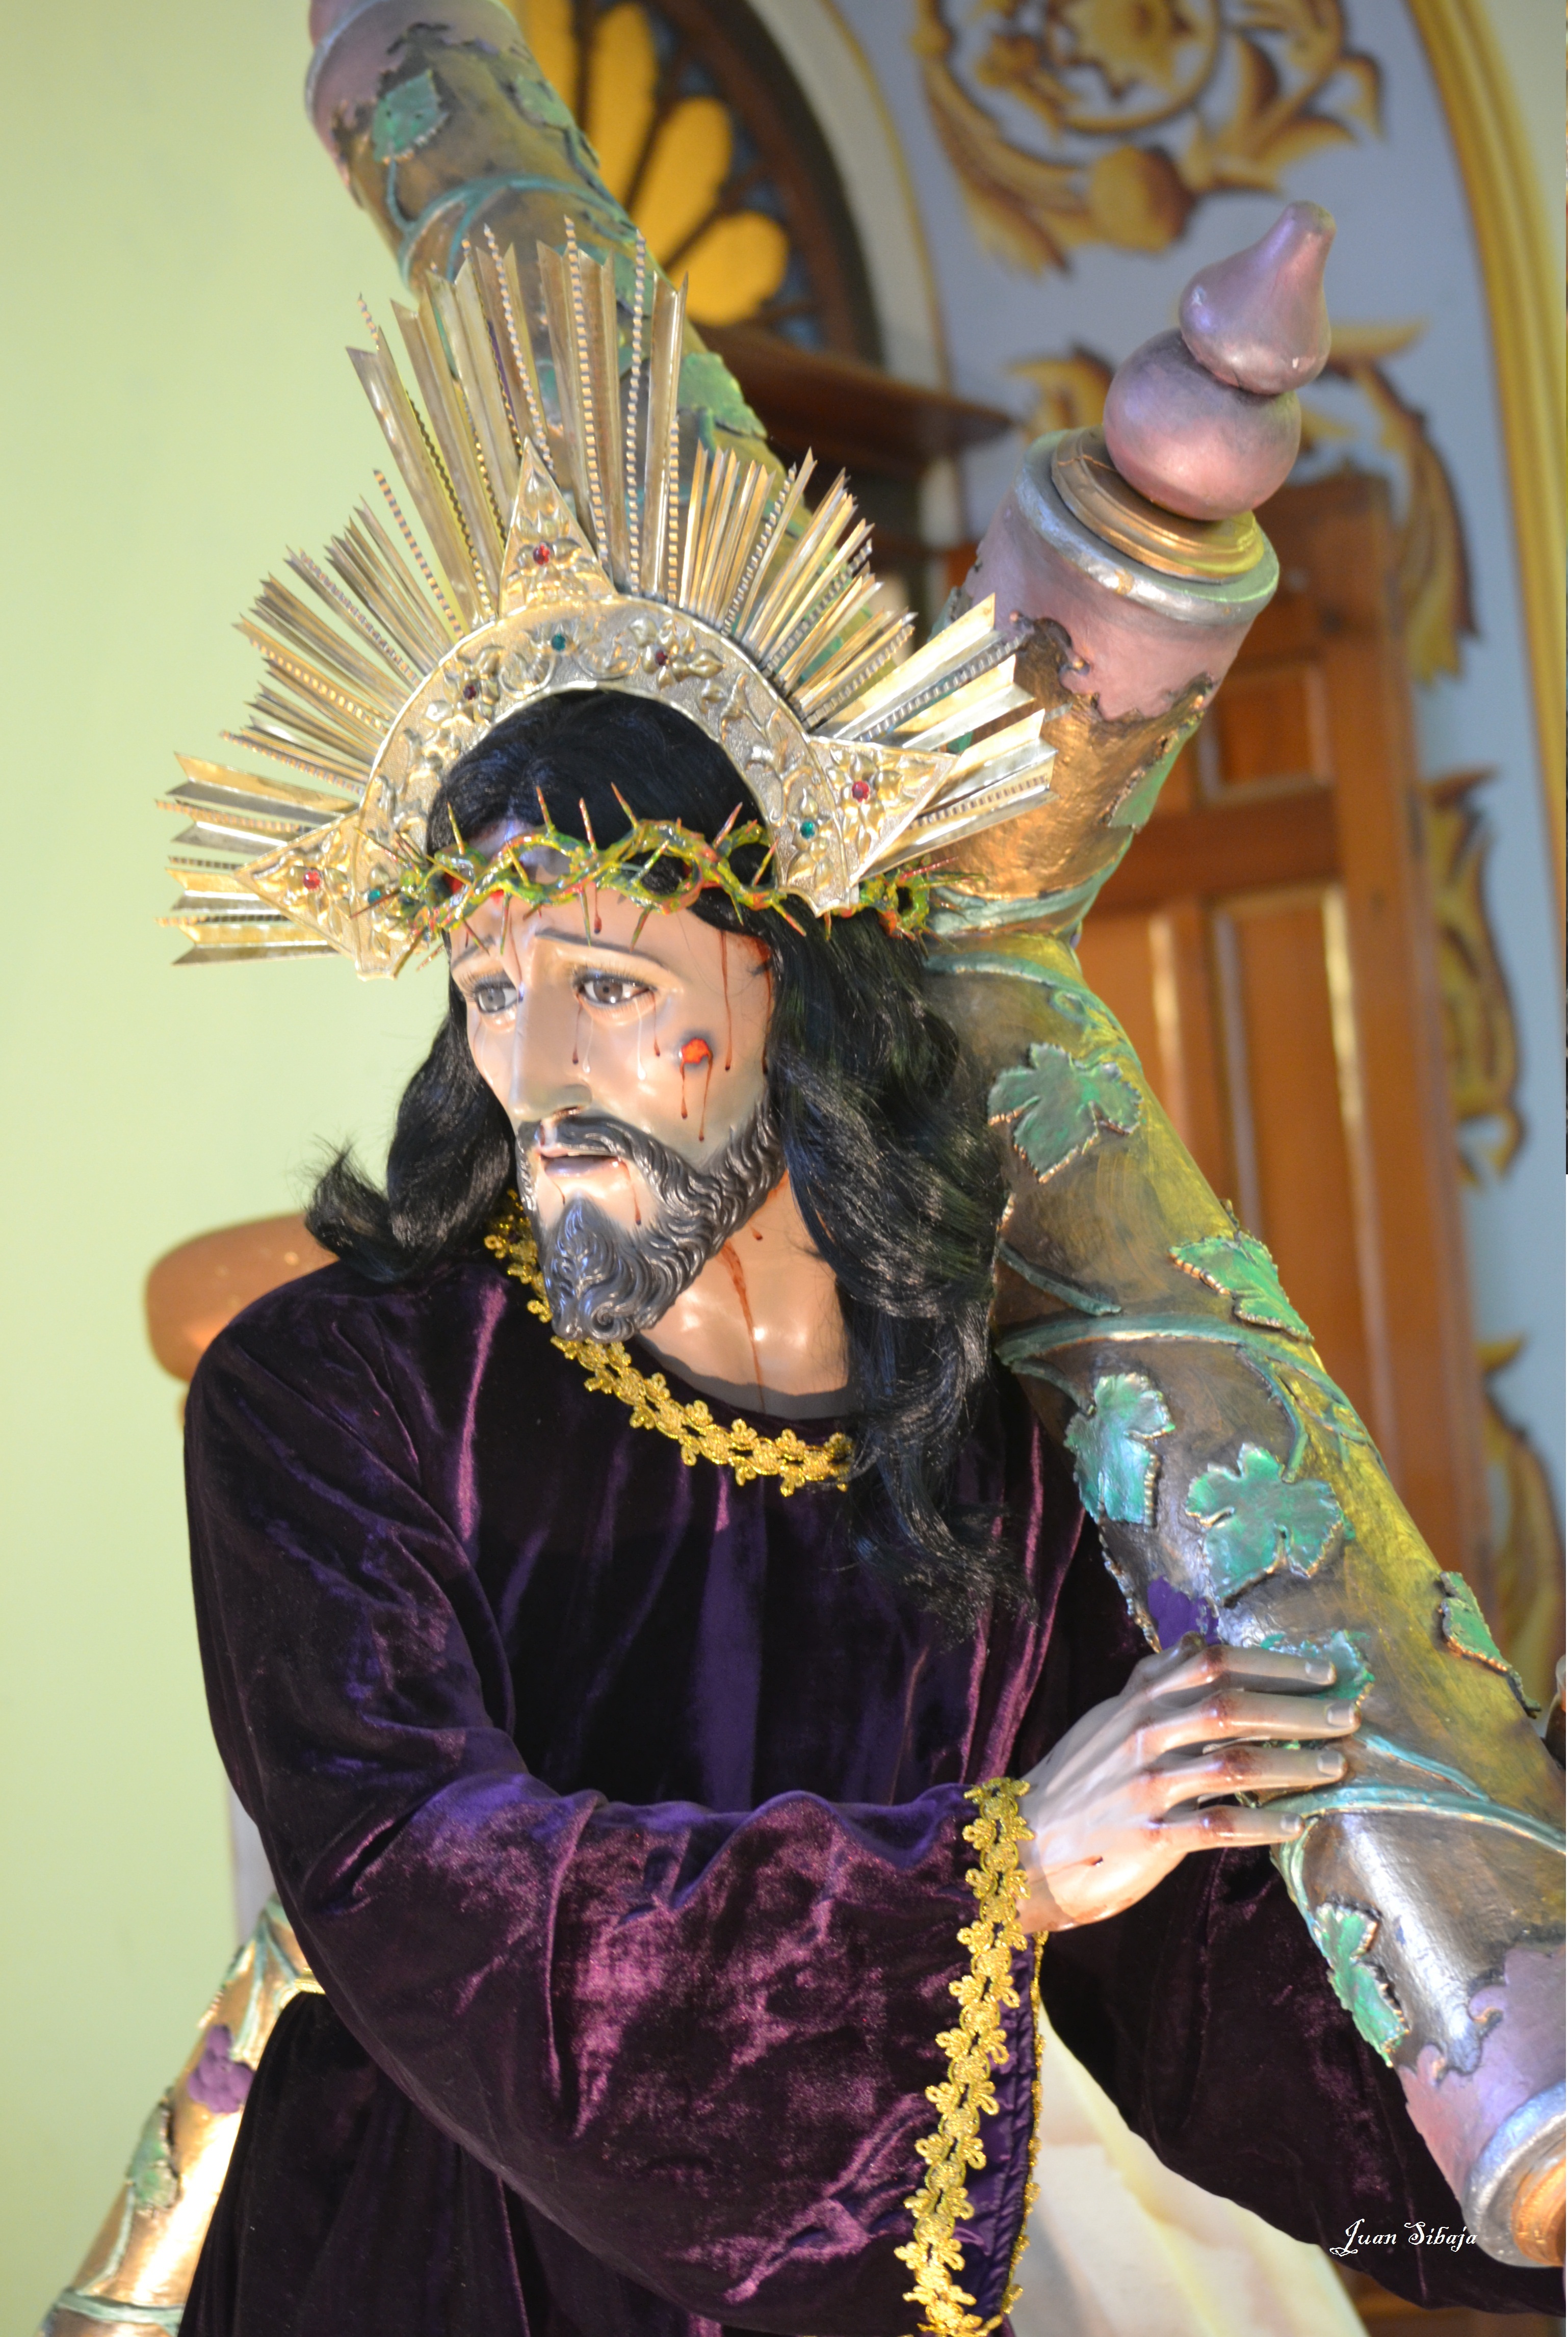 Foto: Jesus de Nazareth - Alajuela, Costa Rica